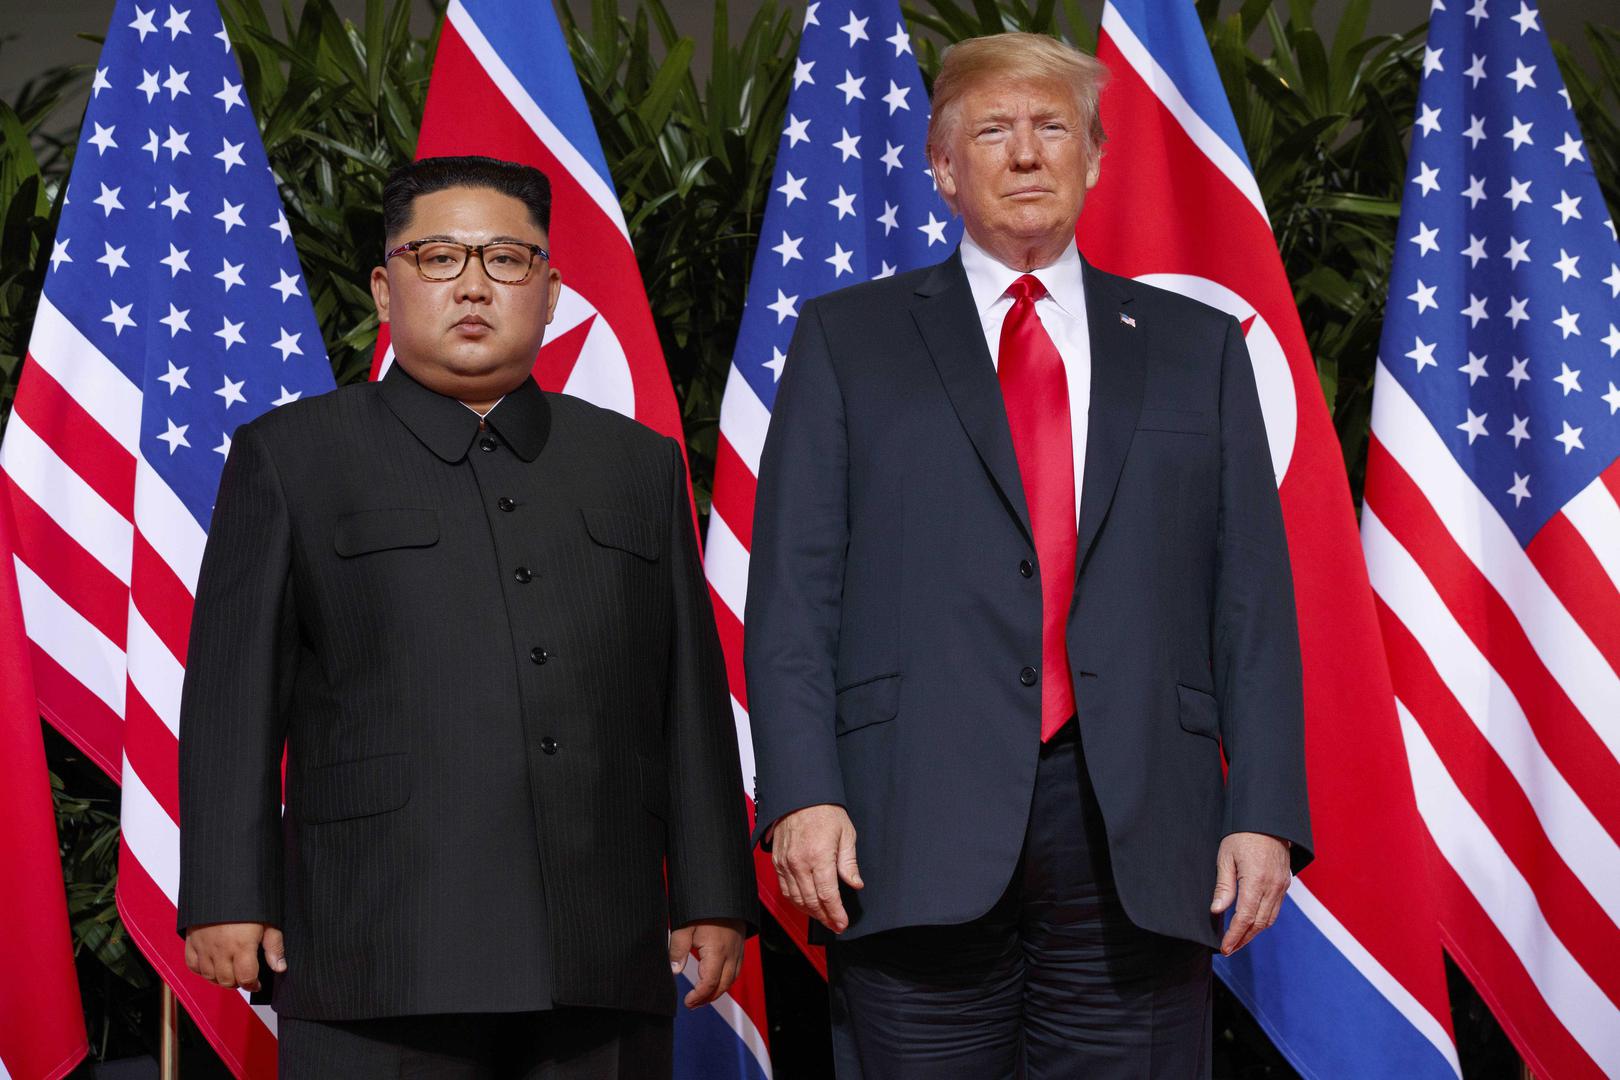 U.S. President Donald Trump meets with North Korean leader Kim Jong Un on Sentosa Island, in Singapore on June 12, 2018. © 2018 AP Photo /Evan Vucci